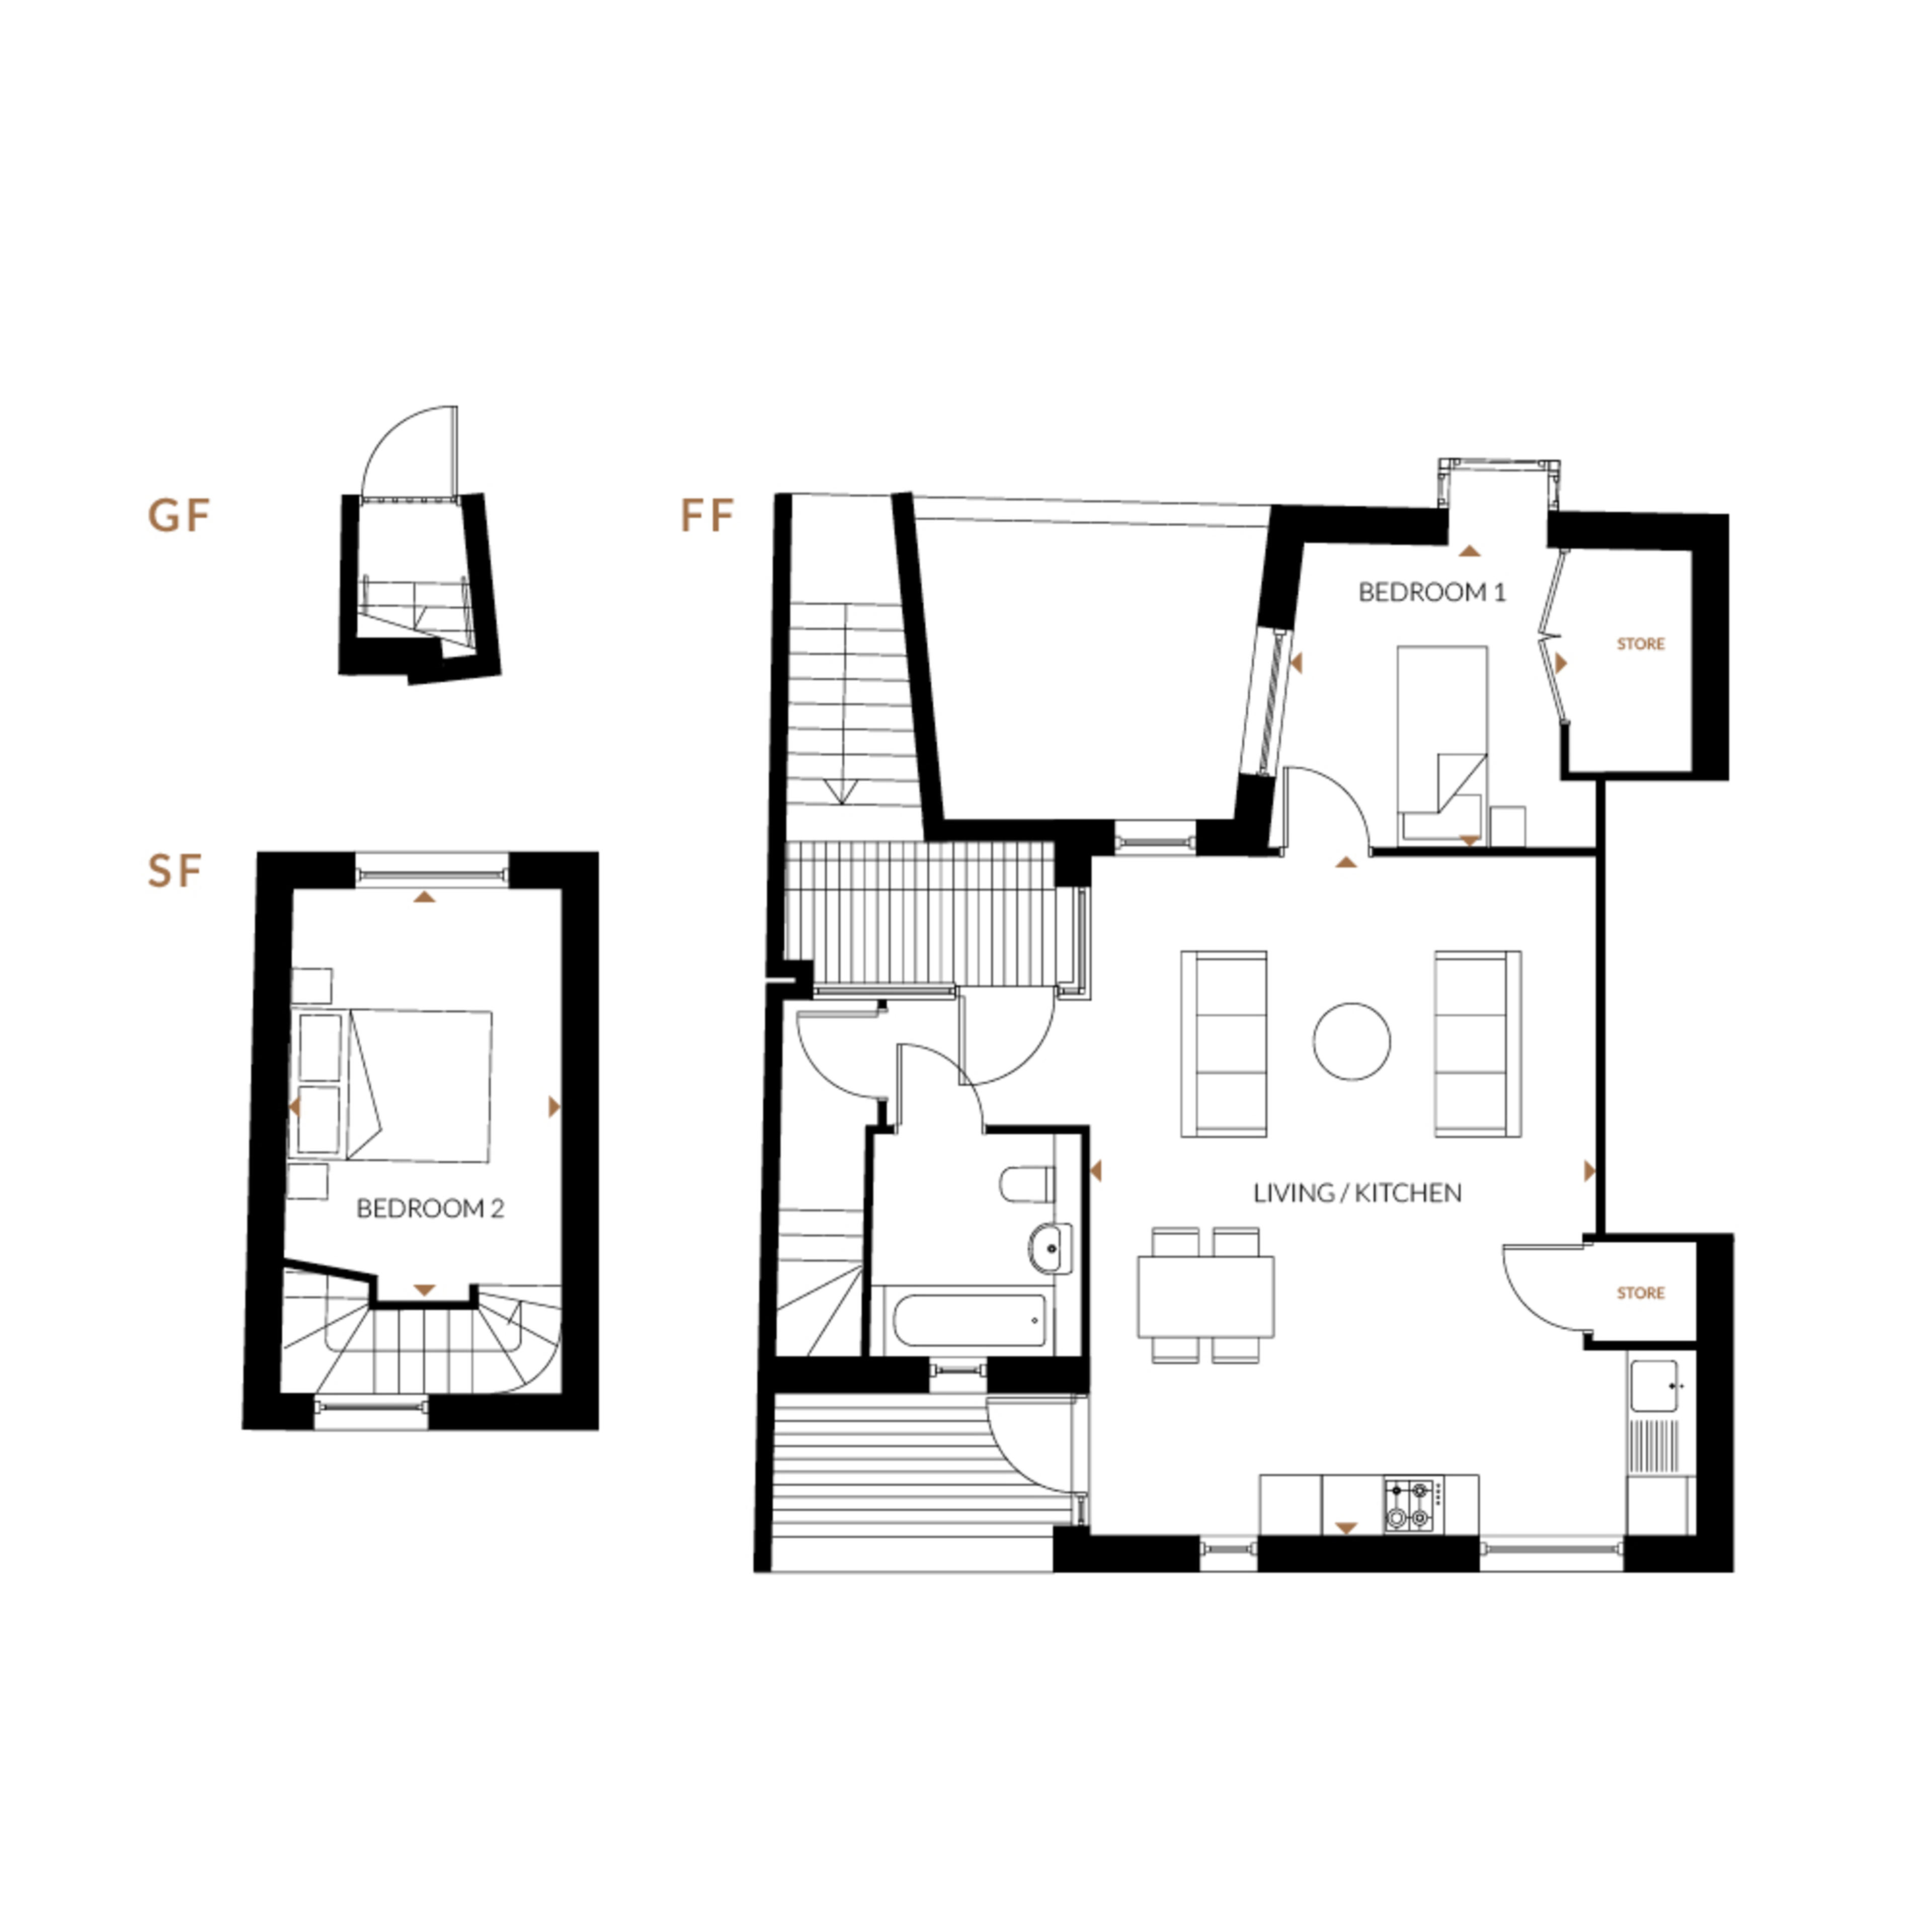 Edgewood-mews-floorplan-2-bed-type-B